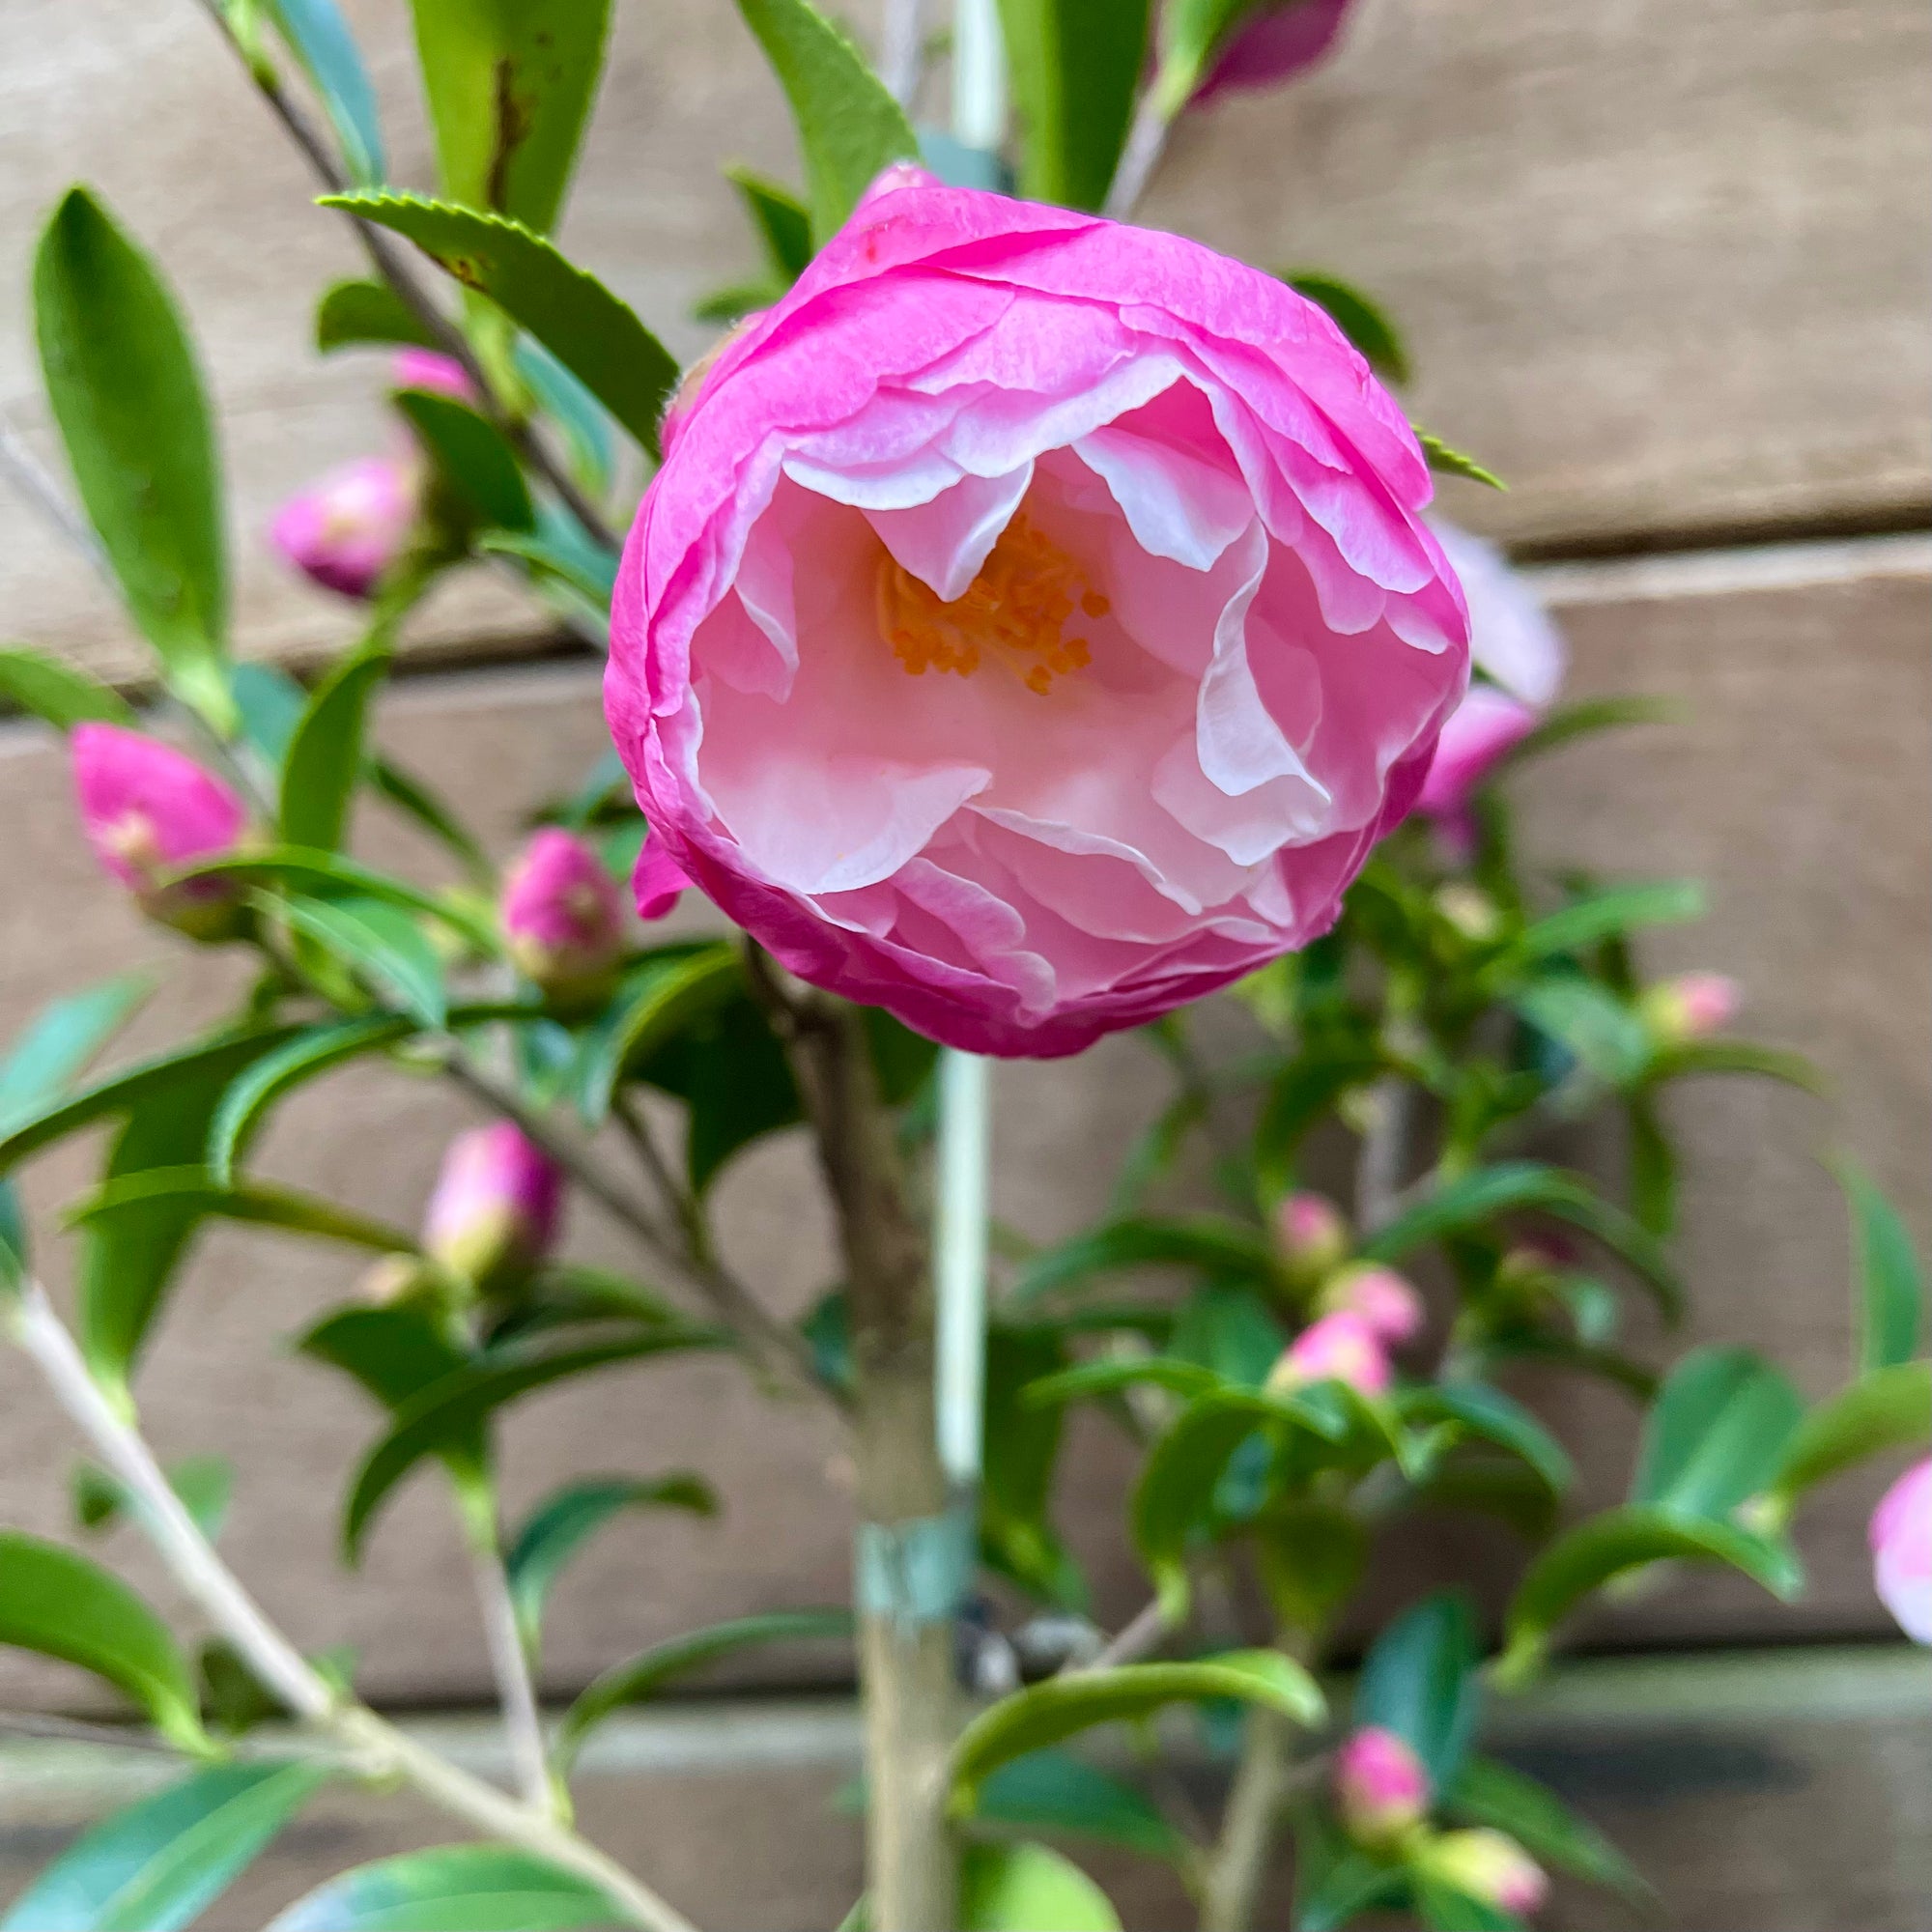 Camellia sasanqua 'Paradise Pearl'